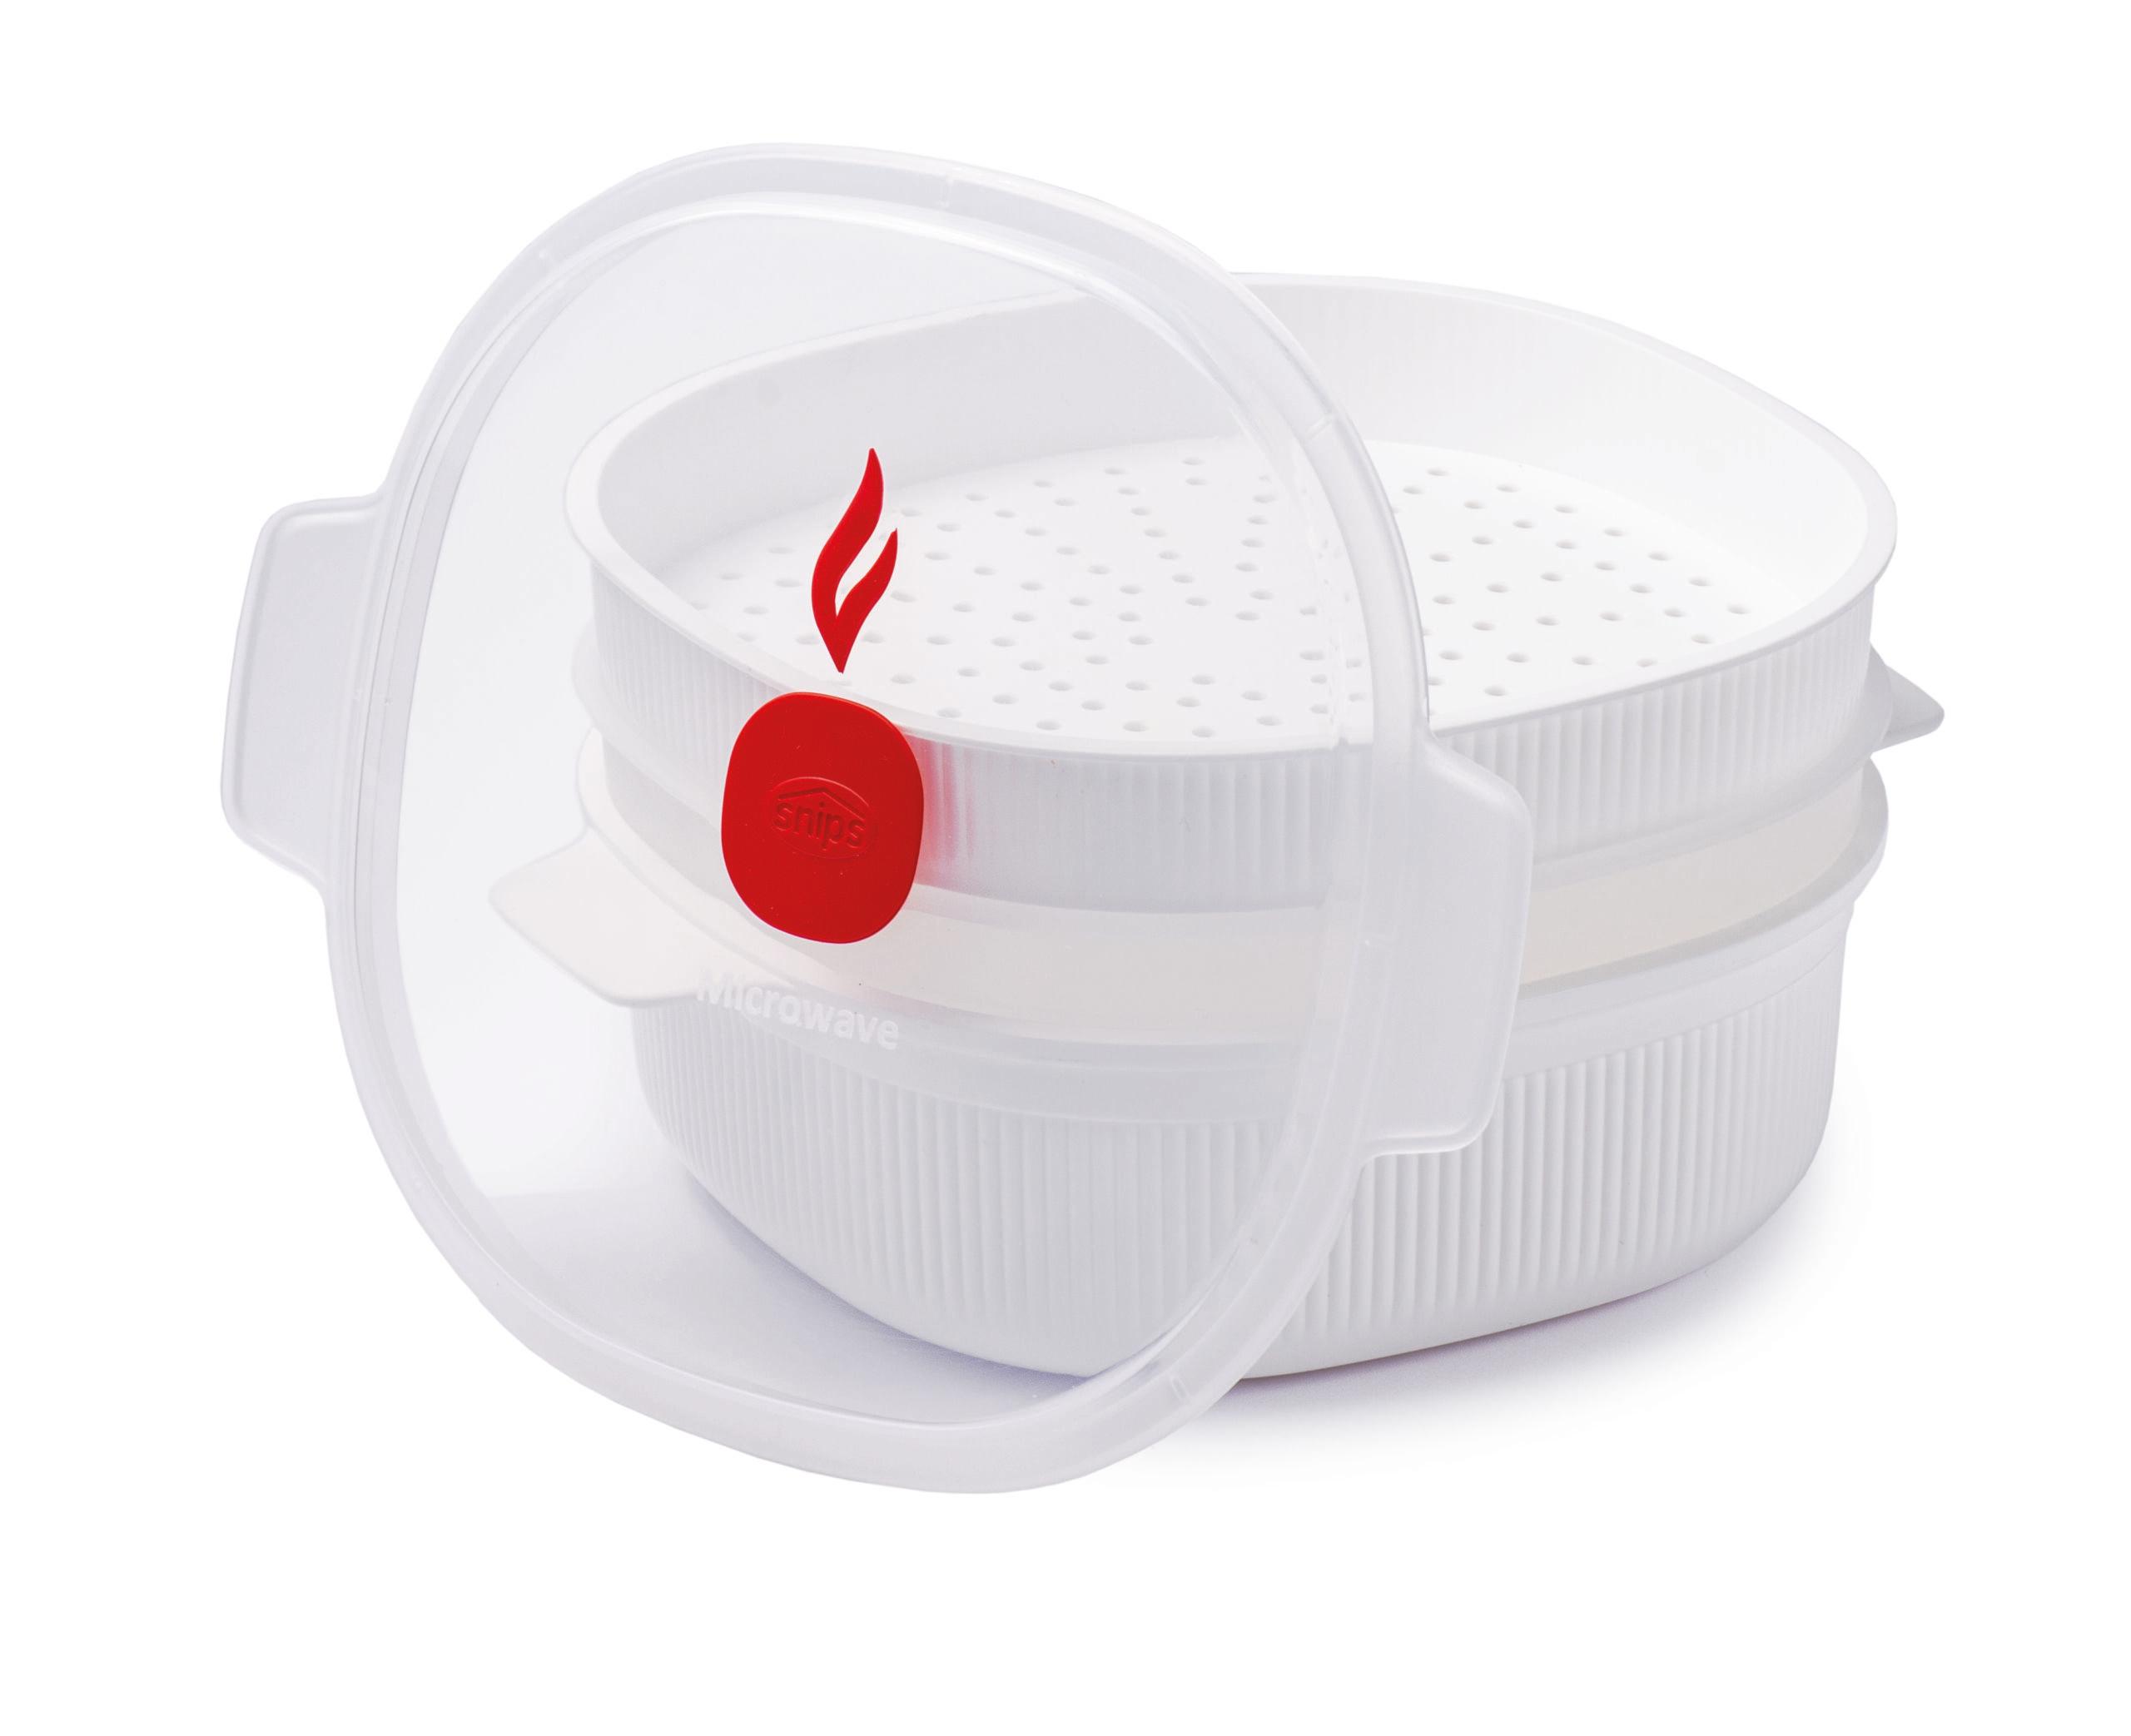 Snips Microwave Dish Steamer 4 Liter Red White PP